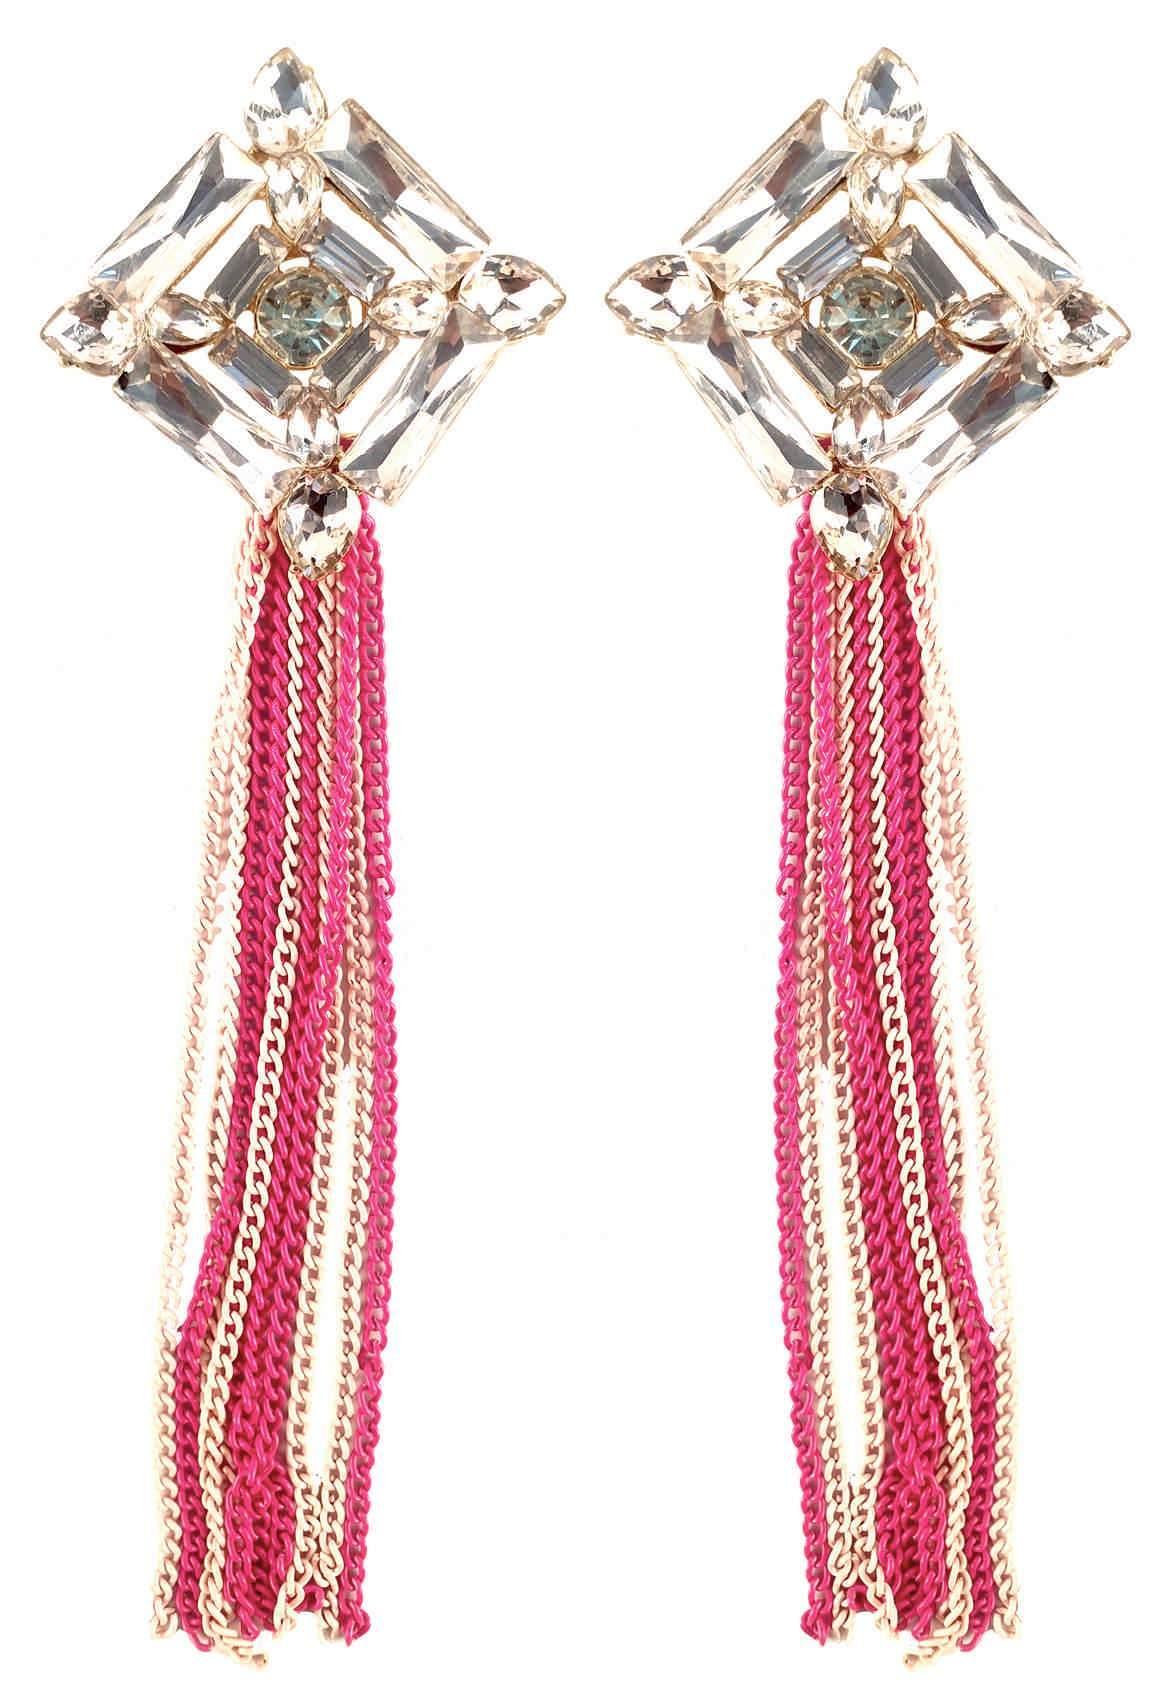 Indian Petals Crystal Chandelier Design Artificial Fashion Dangler Earrings Jhumka with Tassales for Girls Women, Pink